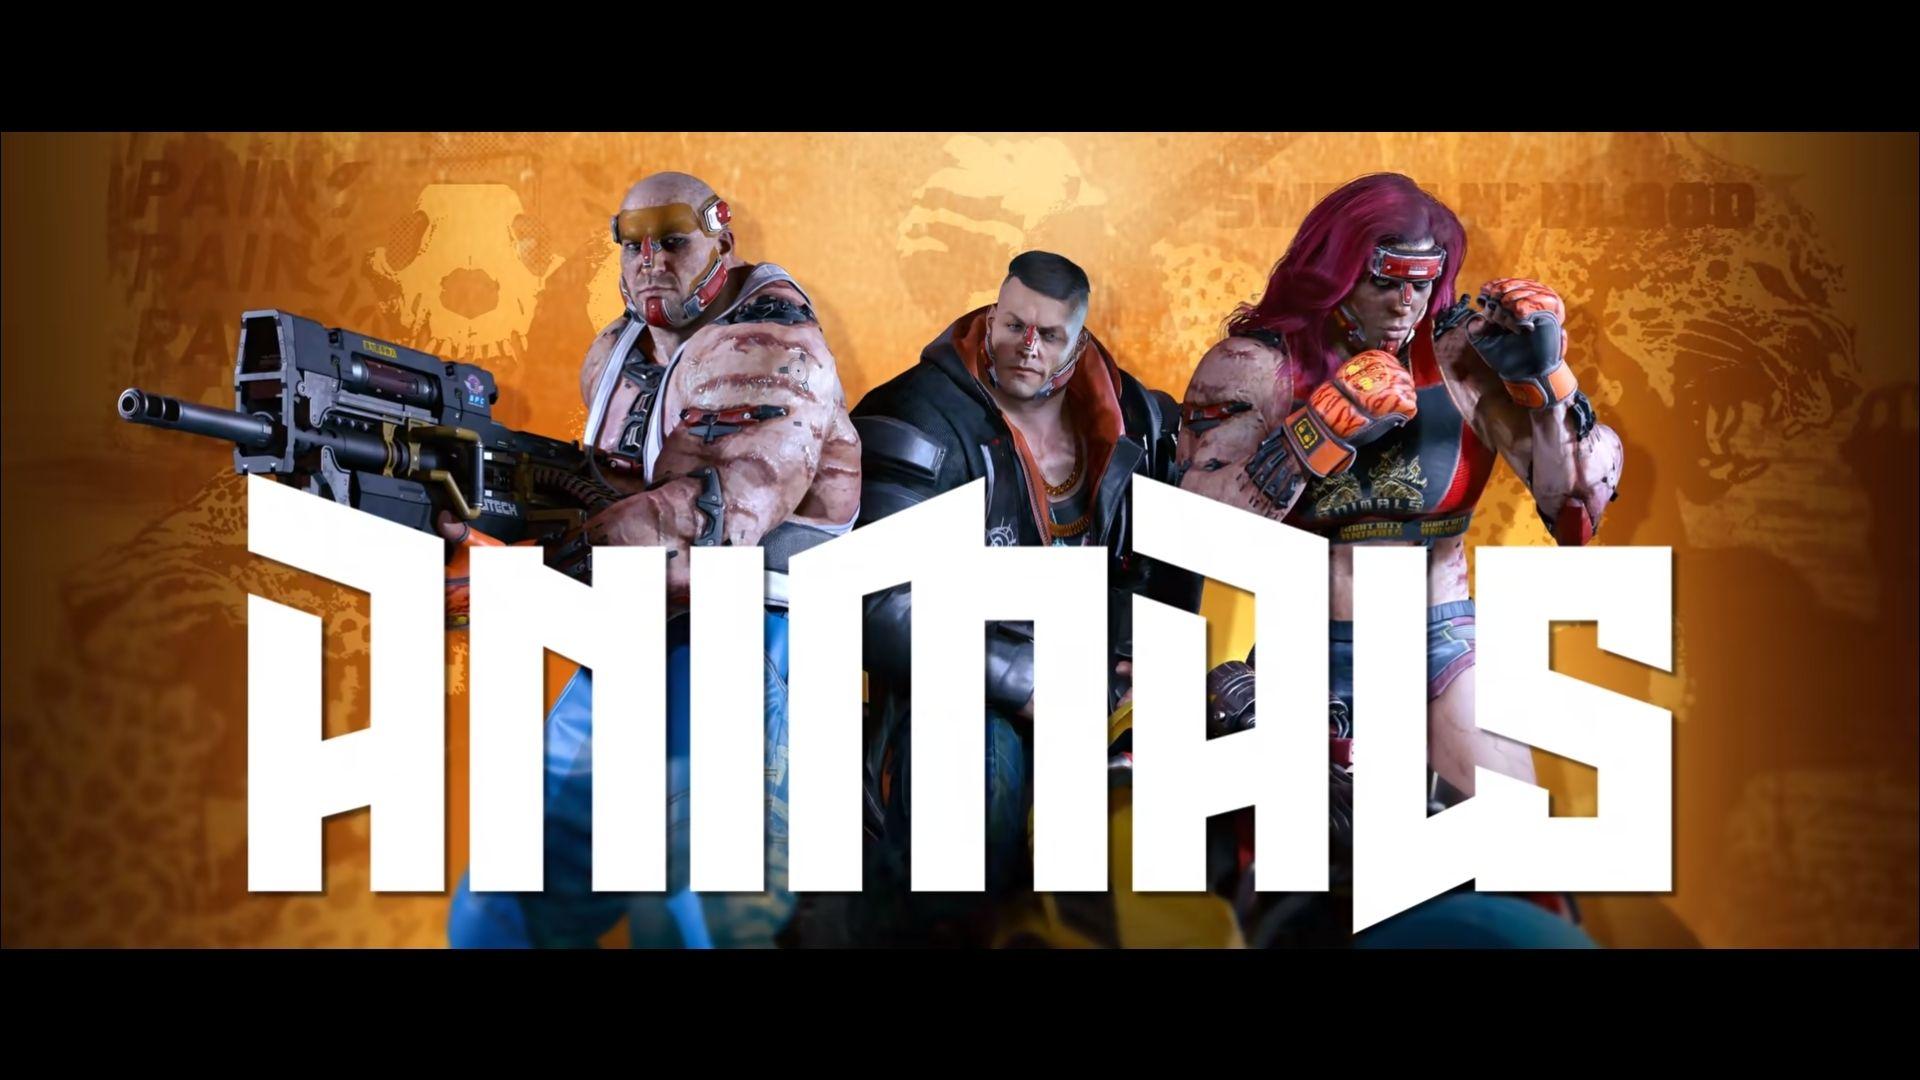 The Animals gang in Cyberpunk 2077